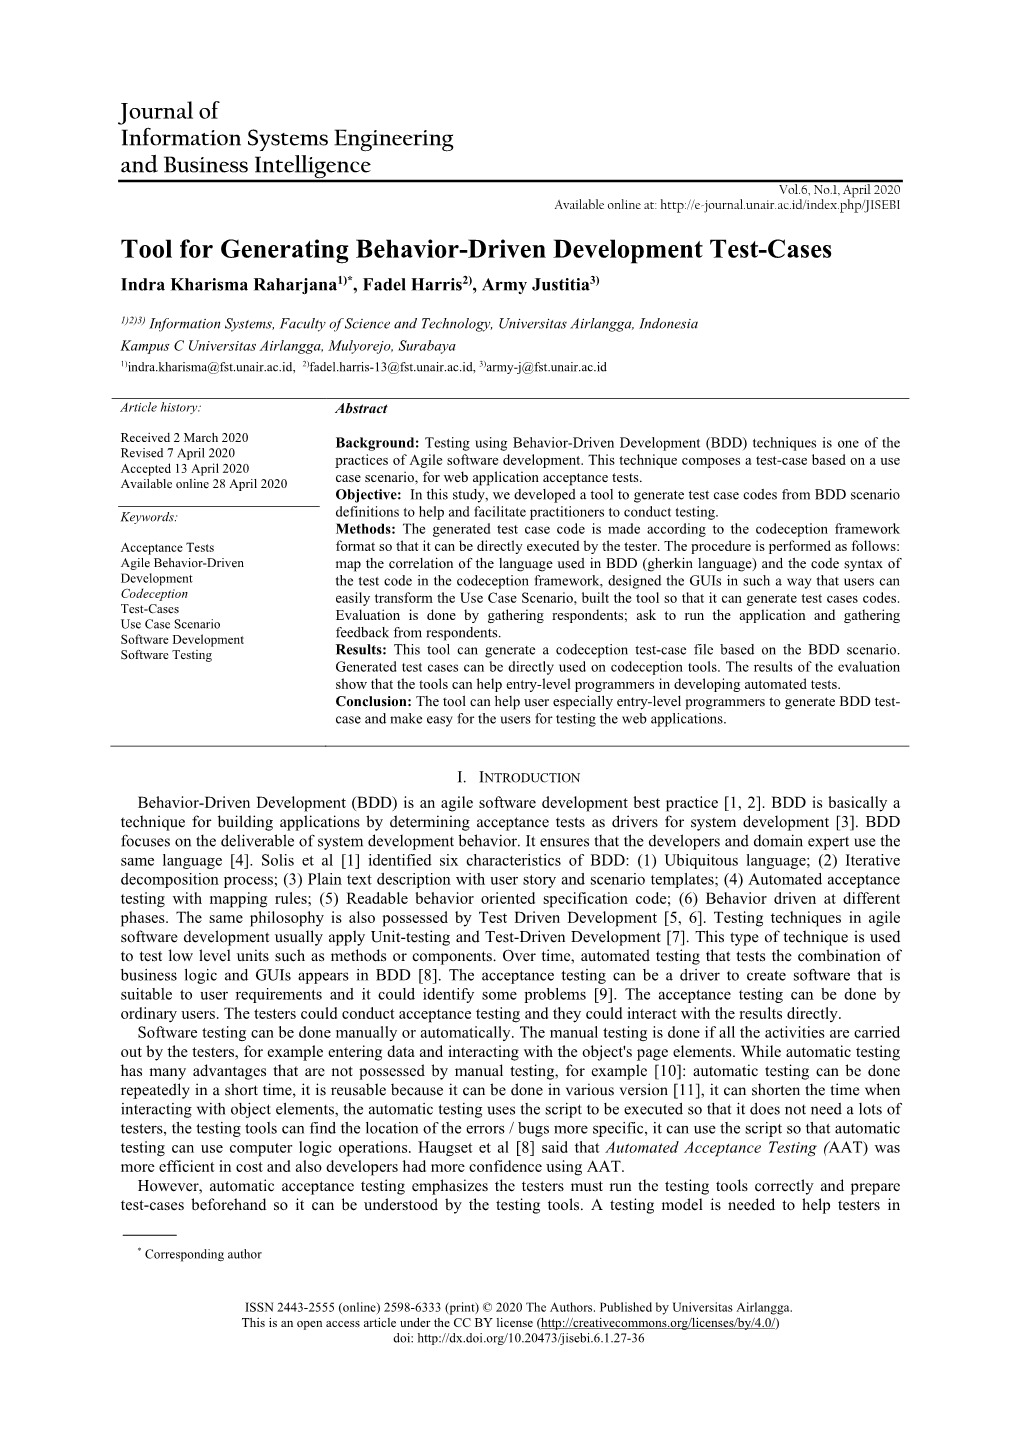 Tool for Generating Behavior-Driven Development Test-Cases Indra Kharisma Raharjana1)*, Fadel Harris2), Army Justitia3)